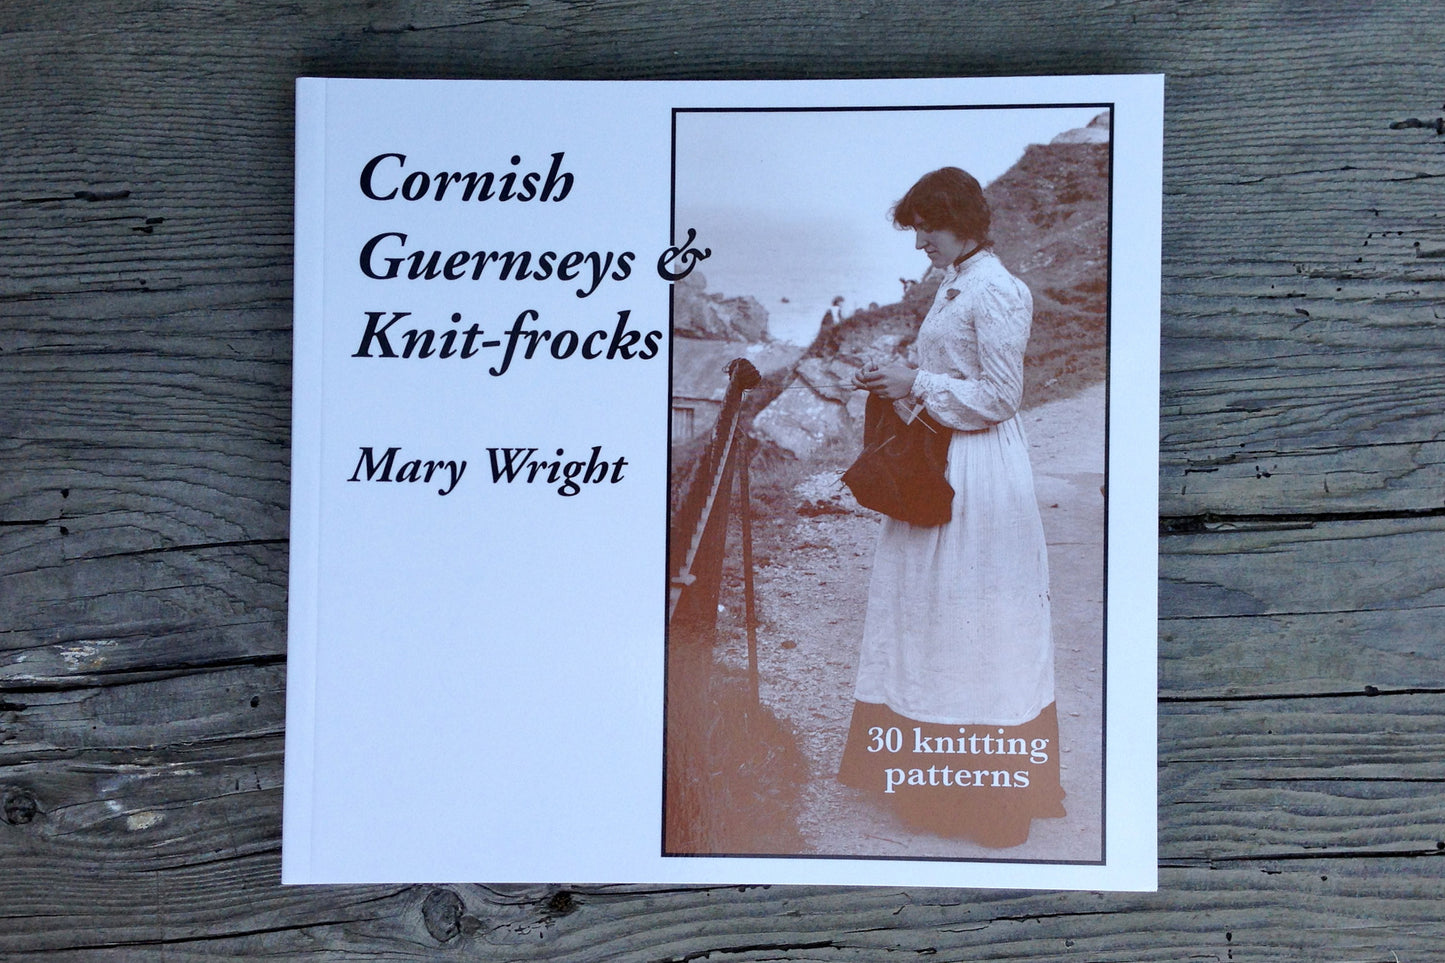 Cornish Guernseys & Knit-frocks by Mary Wright